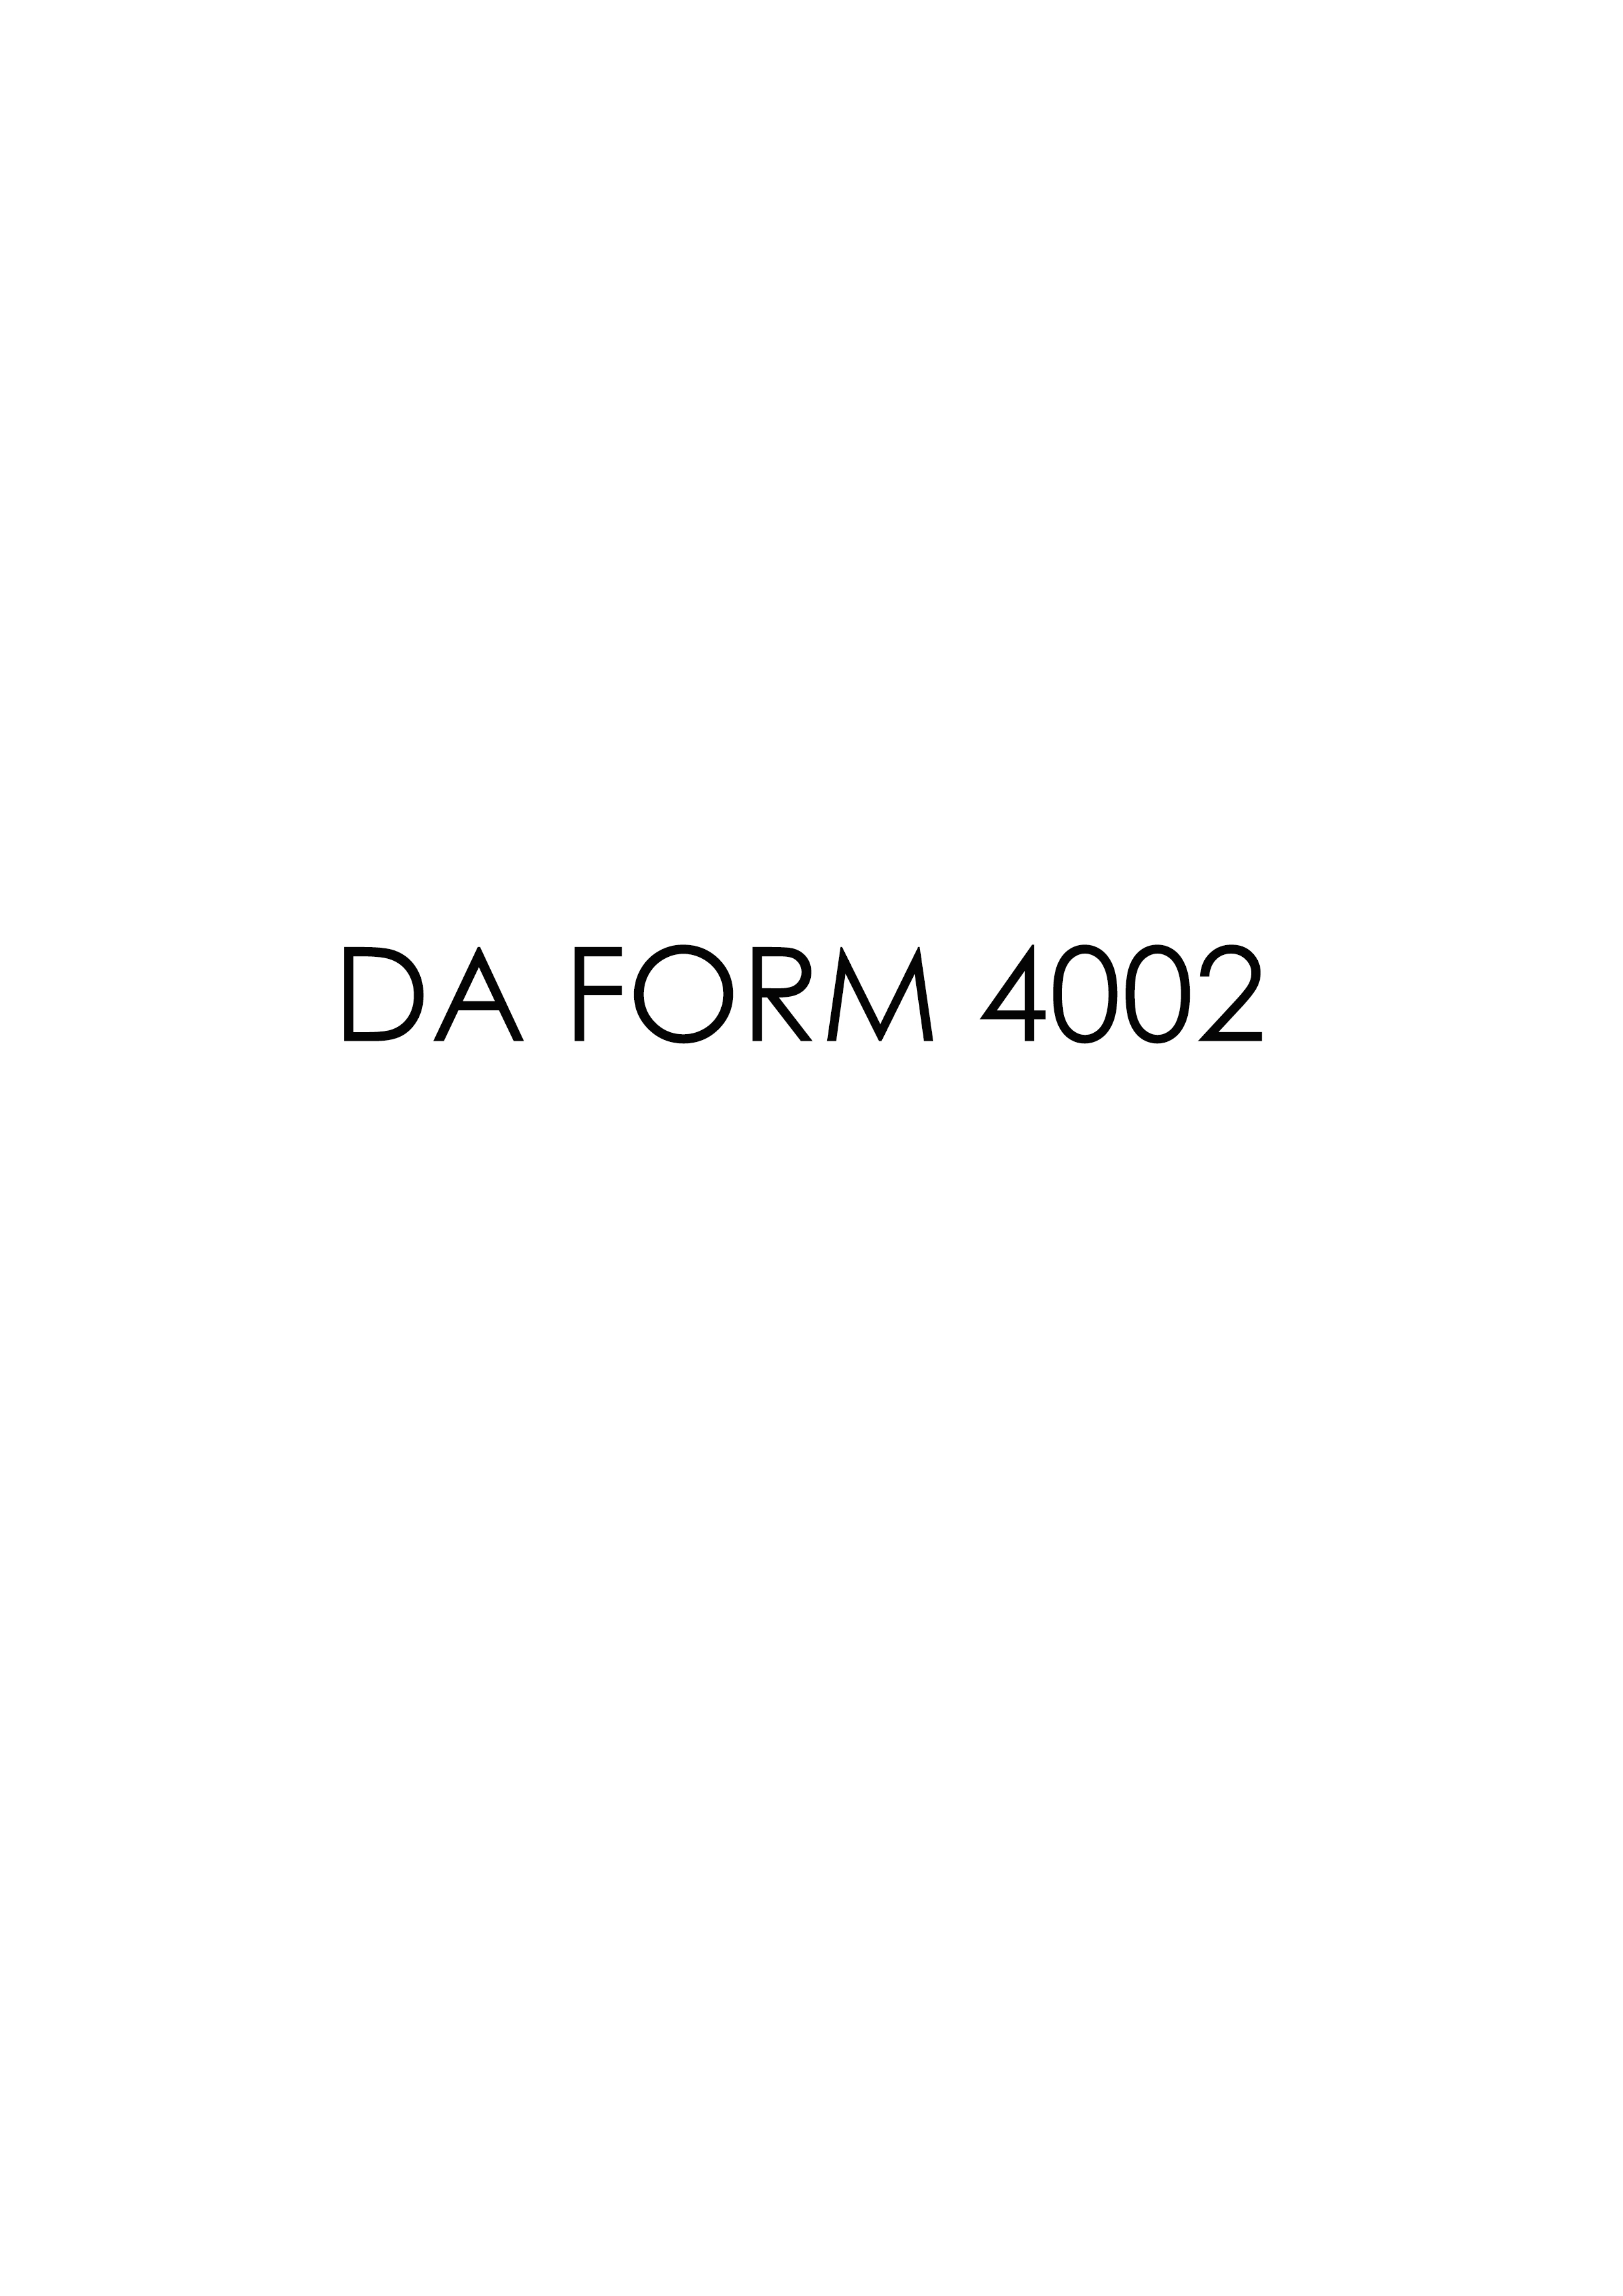 da Form 4002 fillable